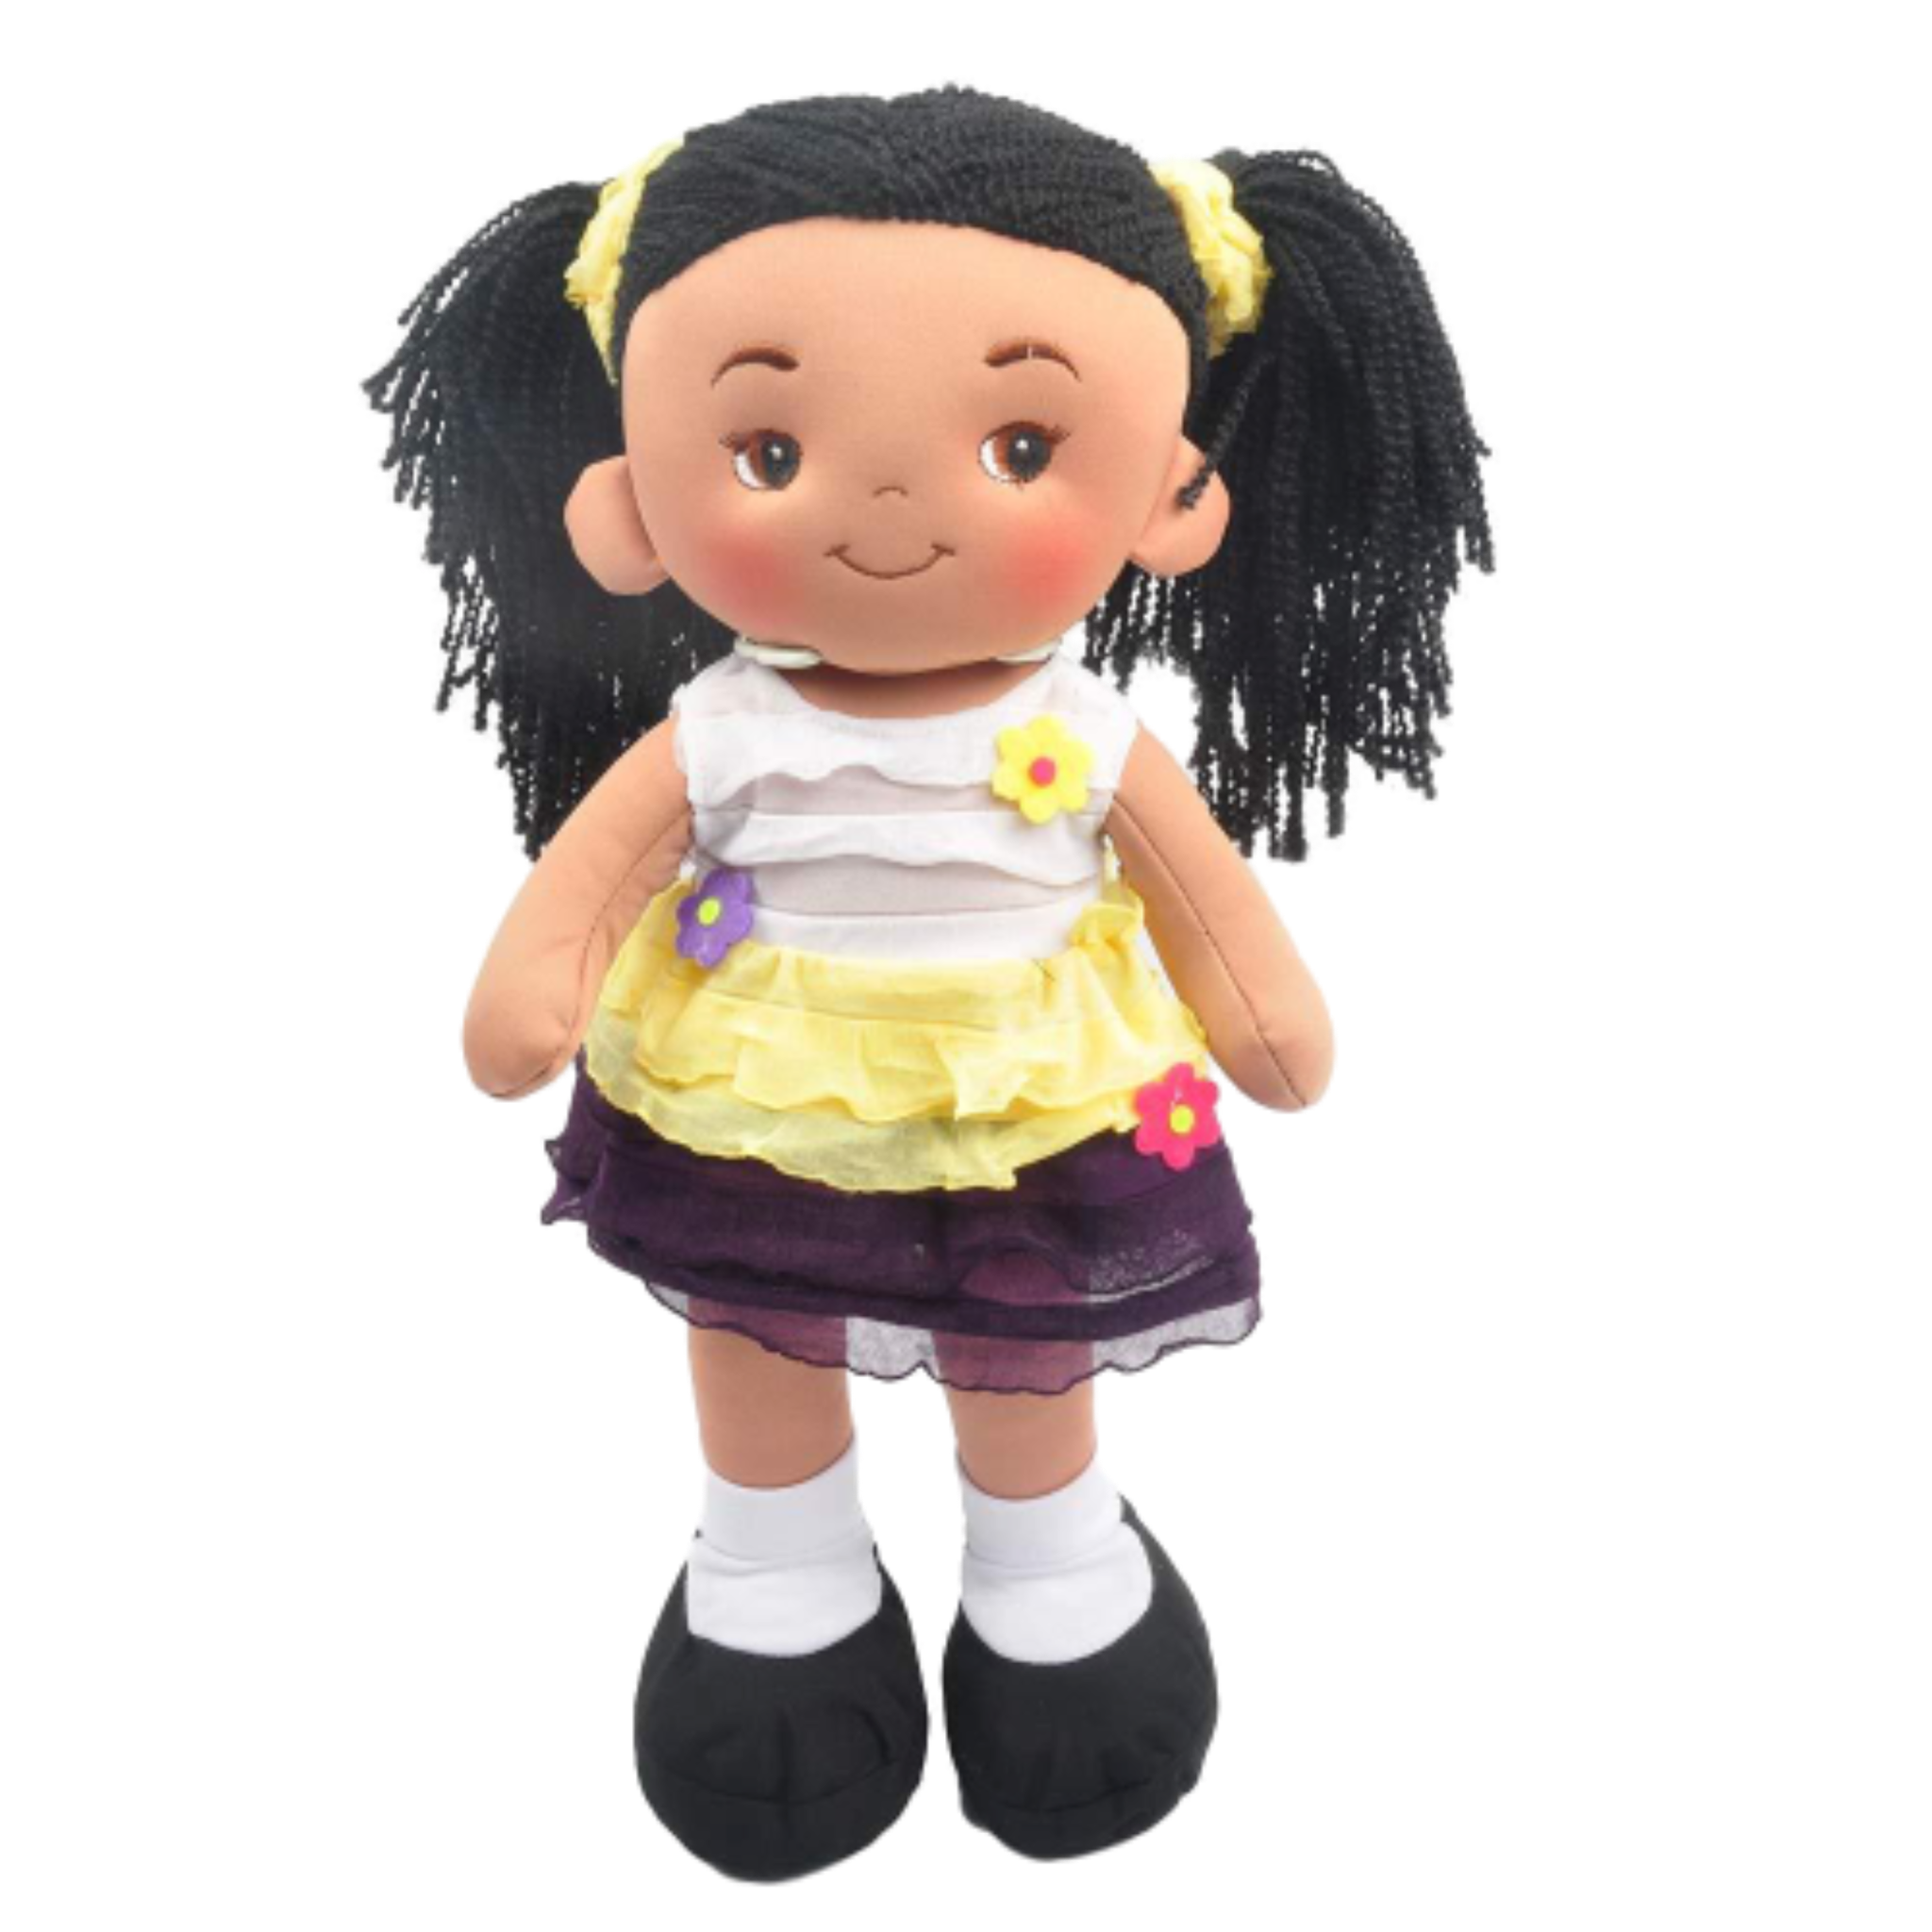 Saragossa Spain. August 5, 2019, Gusiluz is a Molto brand doll